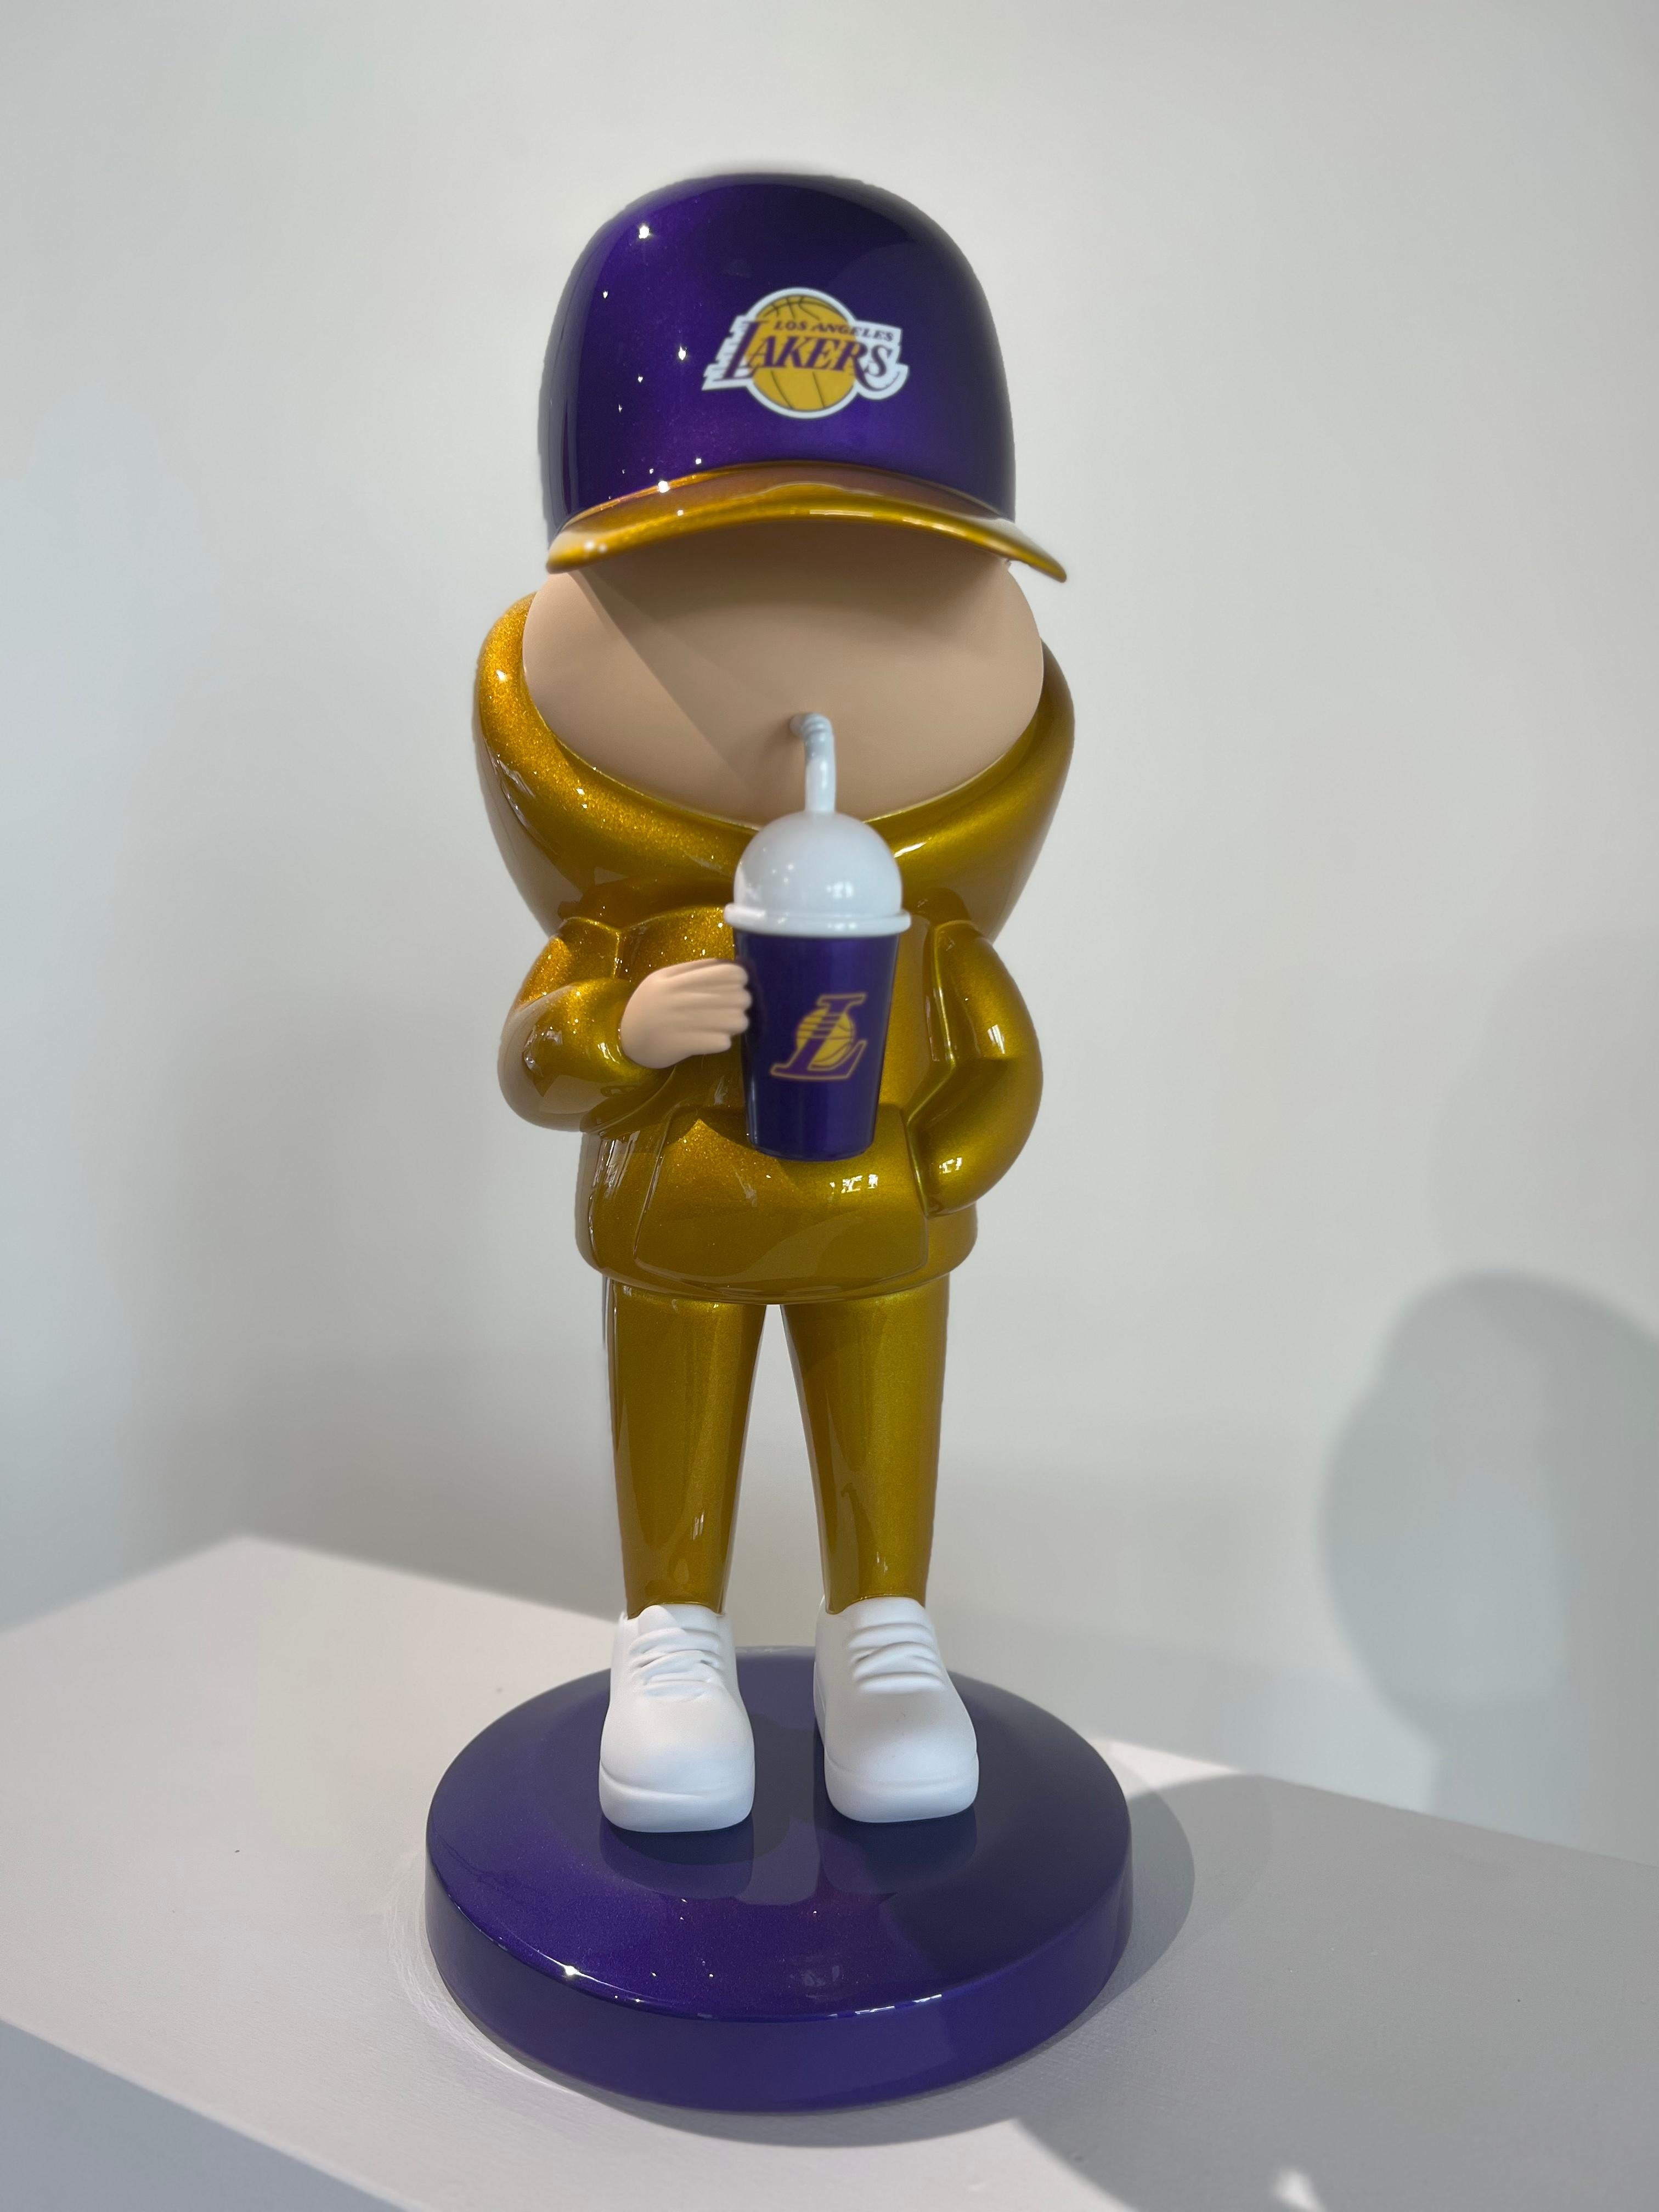 Kidcup Sculpture - Los Angeles Lakers